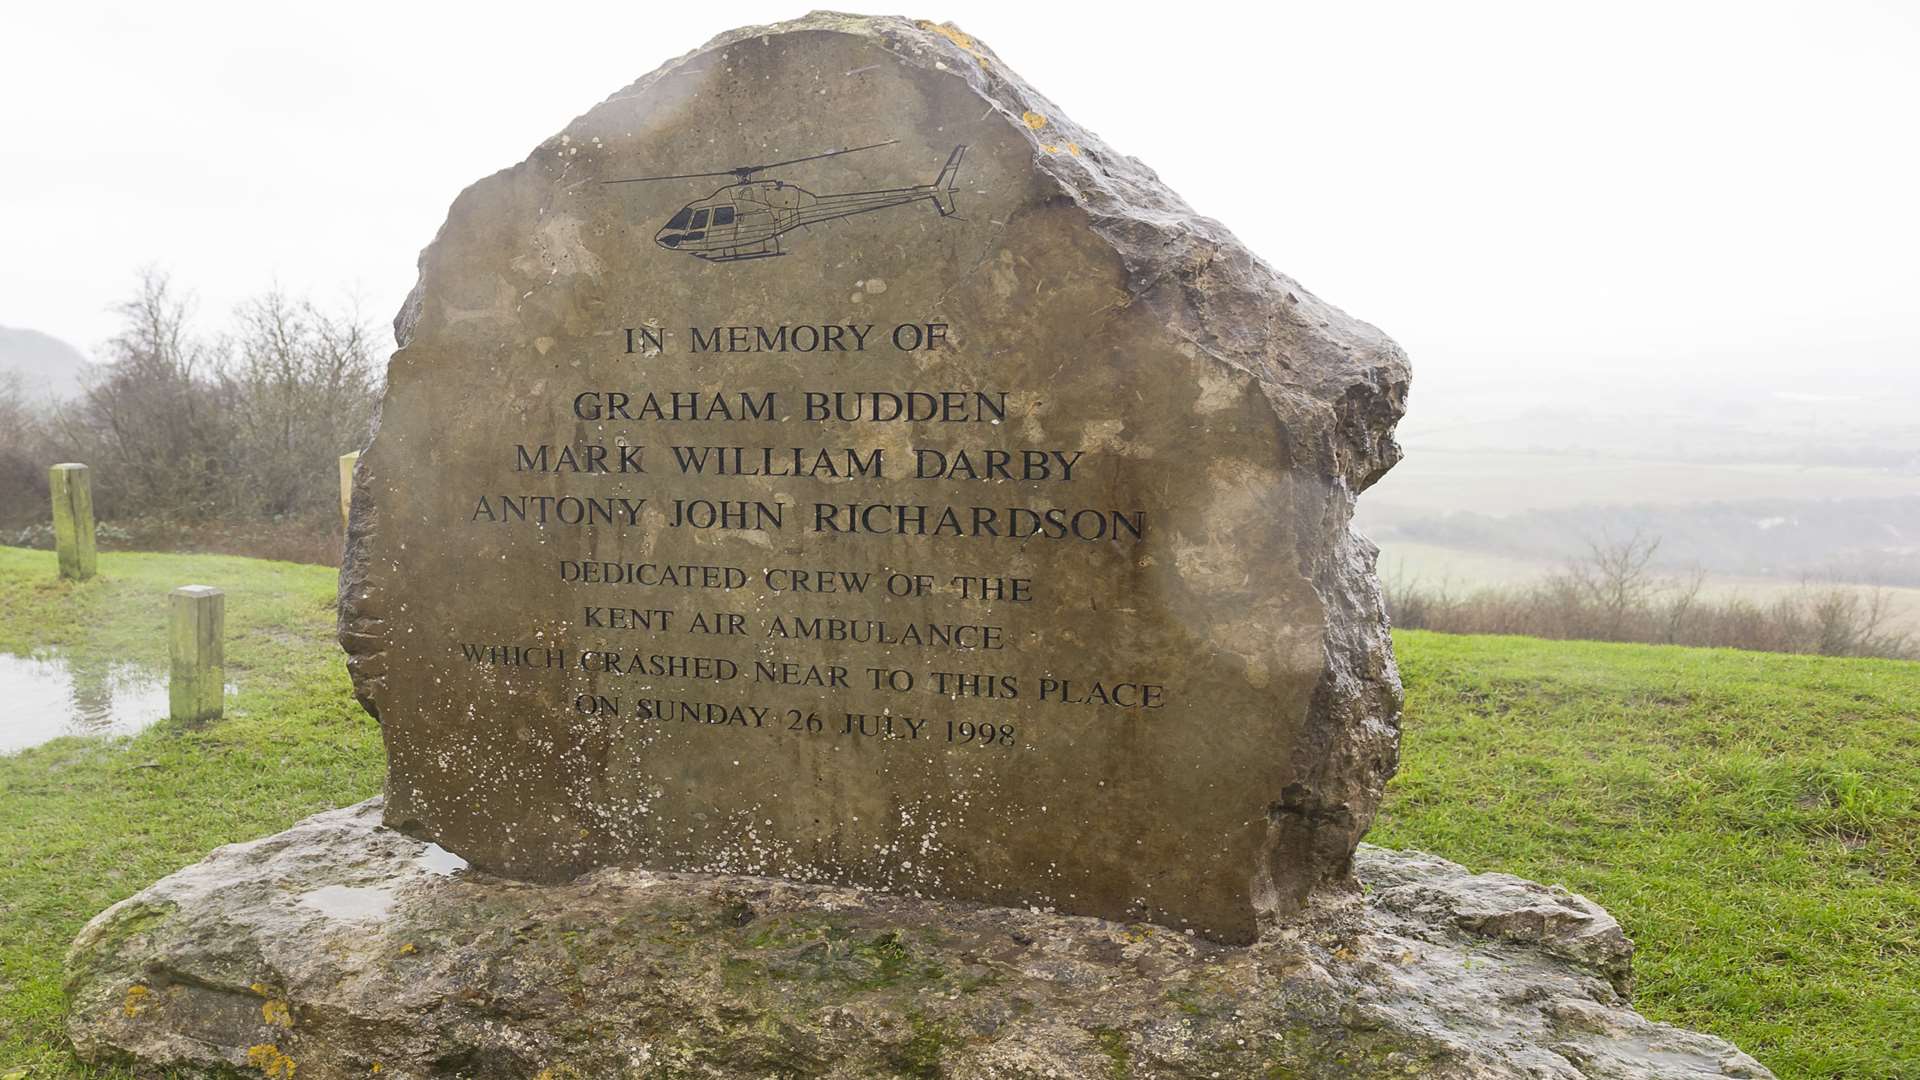 The Kent Air Ambulance memorial stone